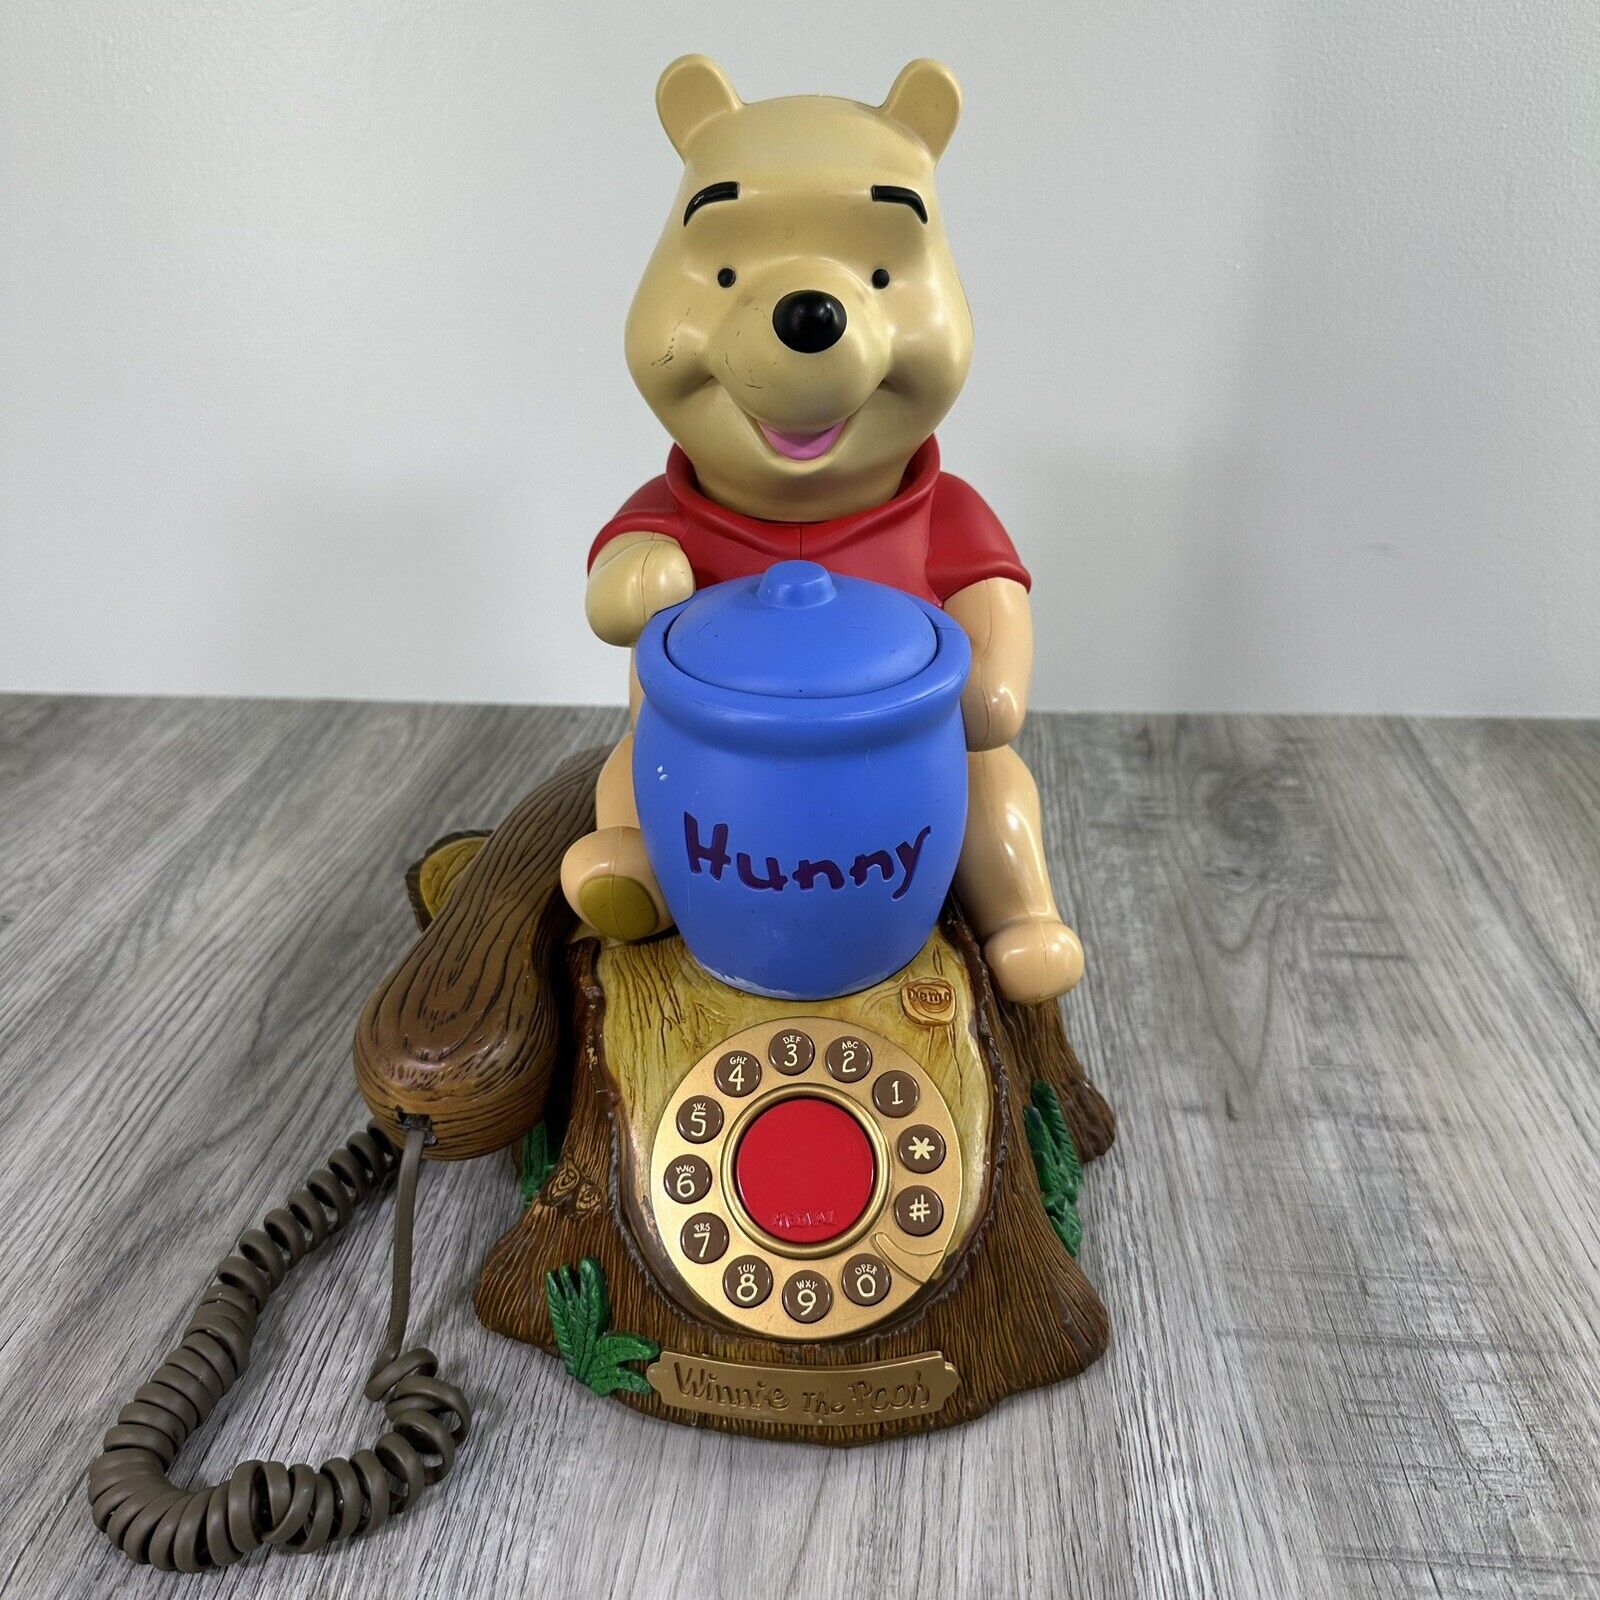 Vintage Disney Winnie The Pooh & Piglet Animated Talking Telephone Tested Works